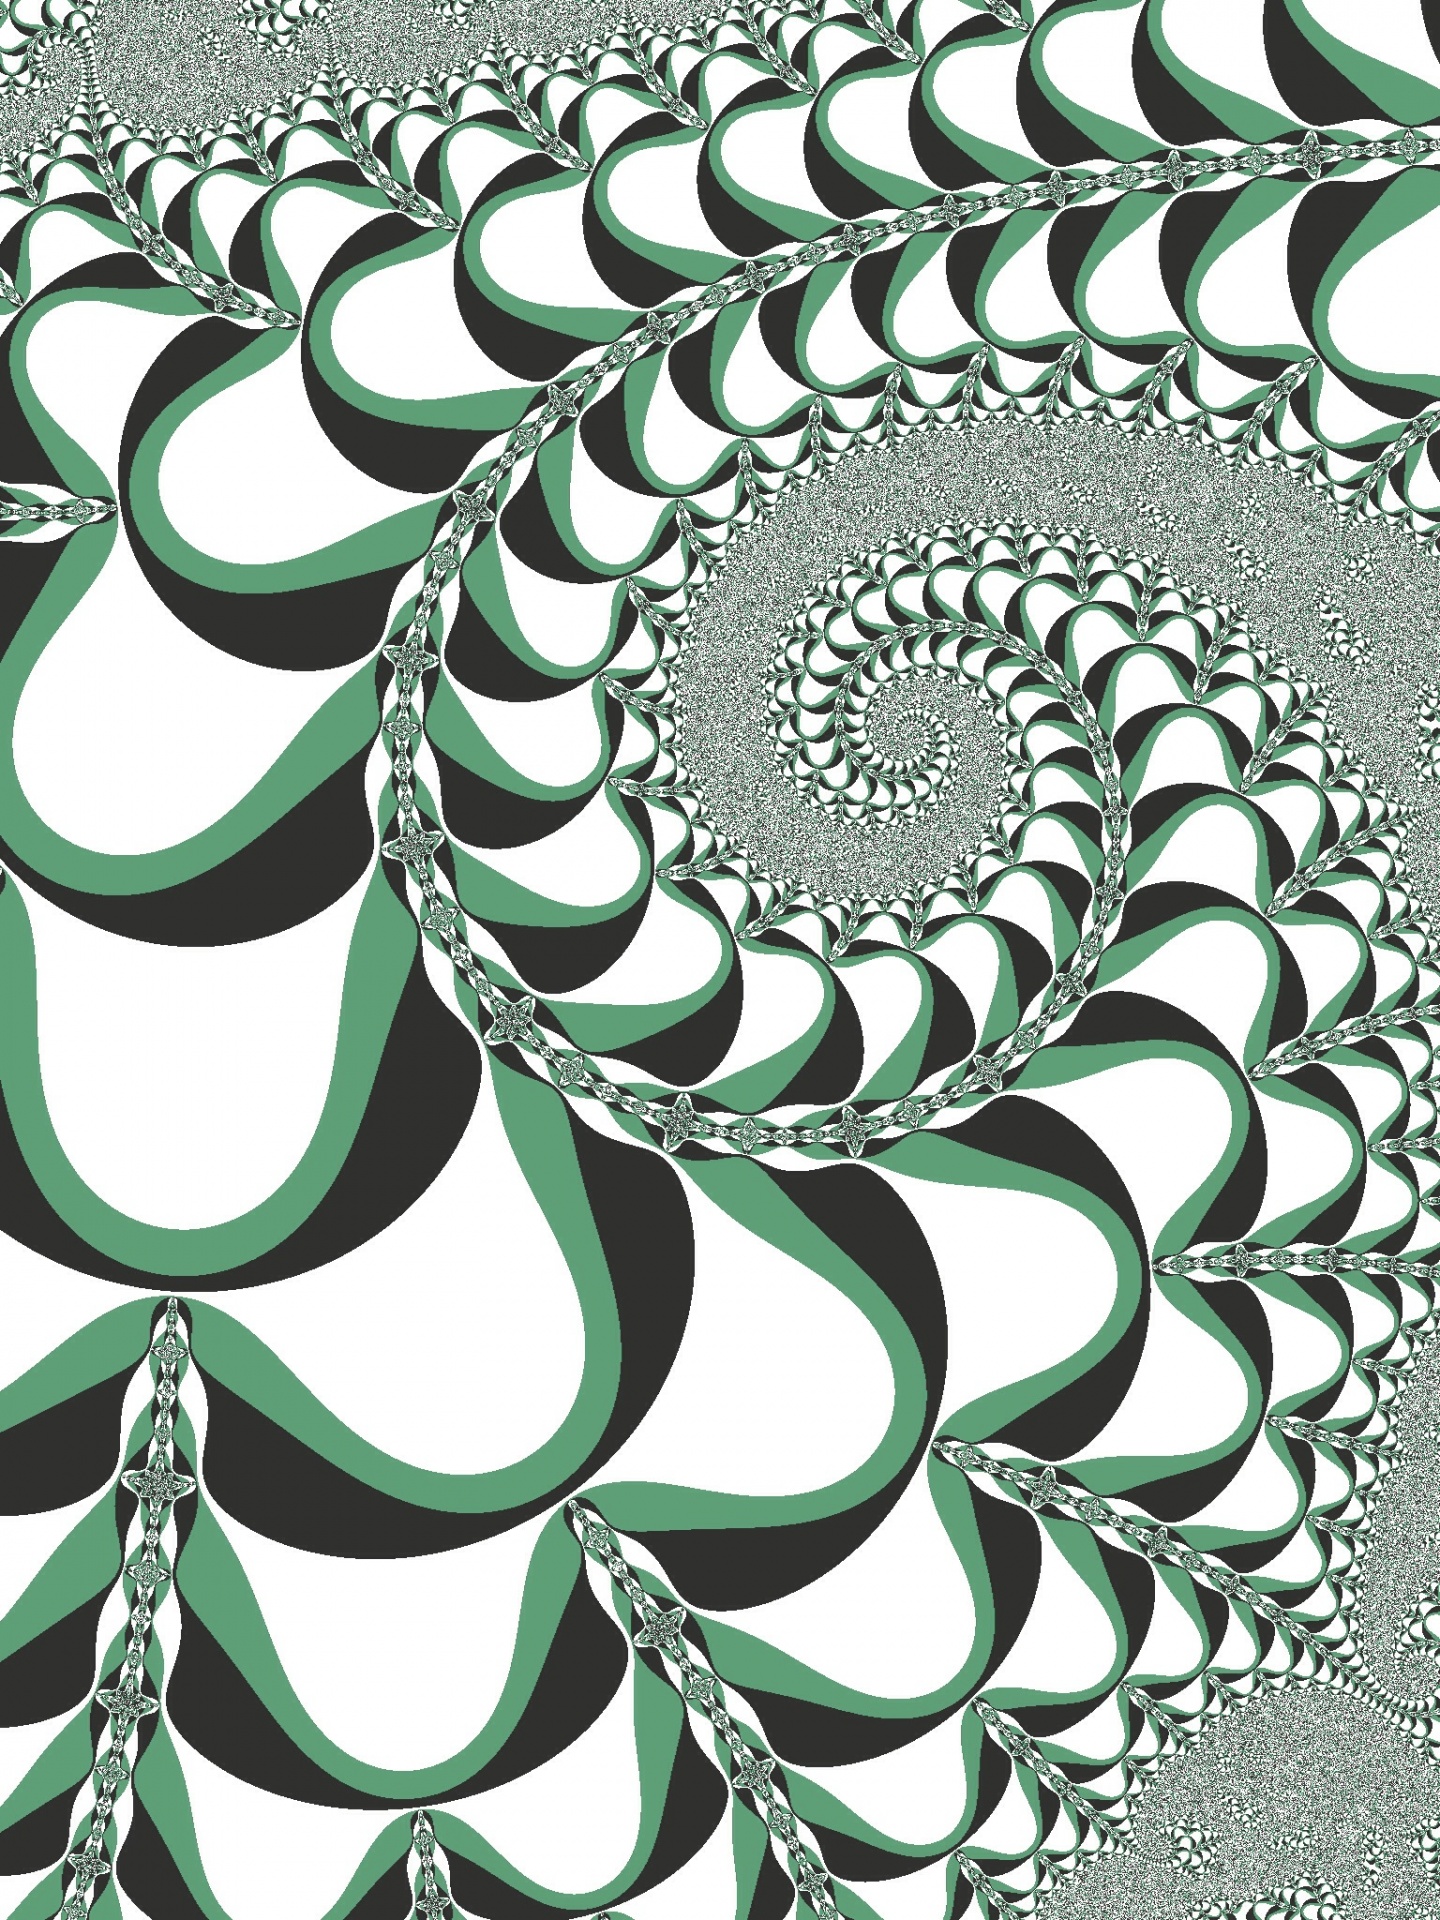 Fractal spiraal in groene kleuren